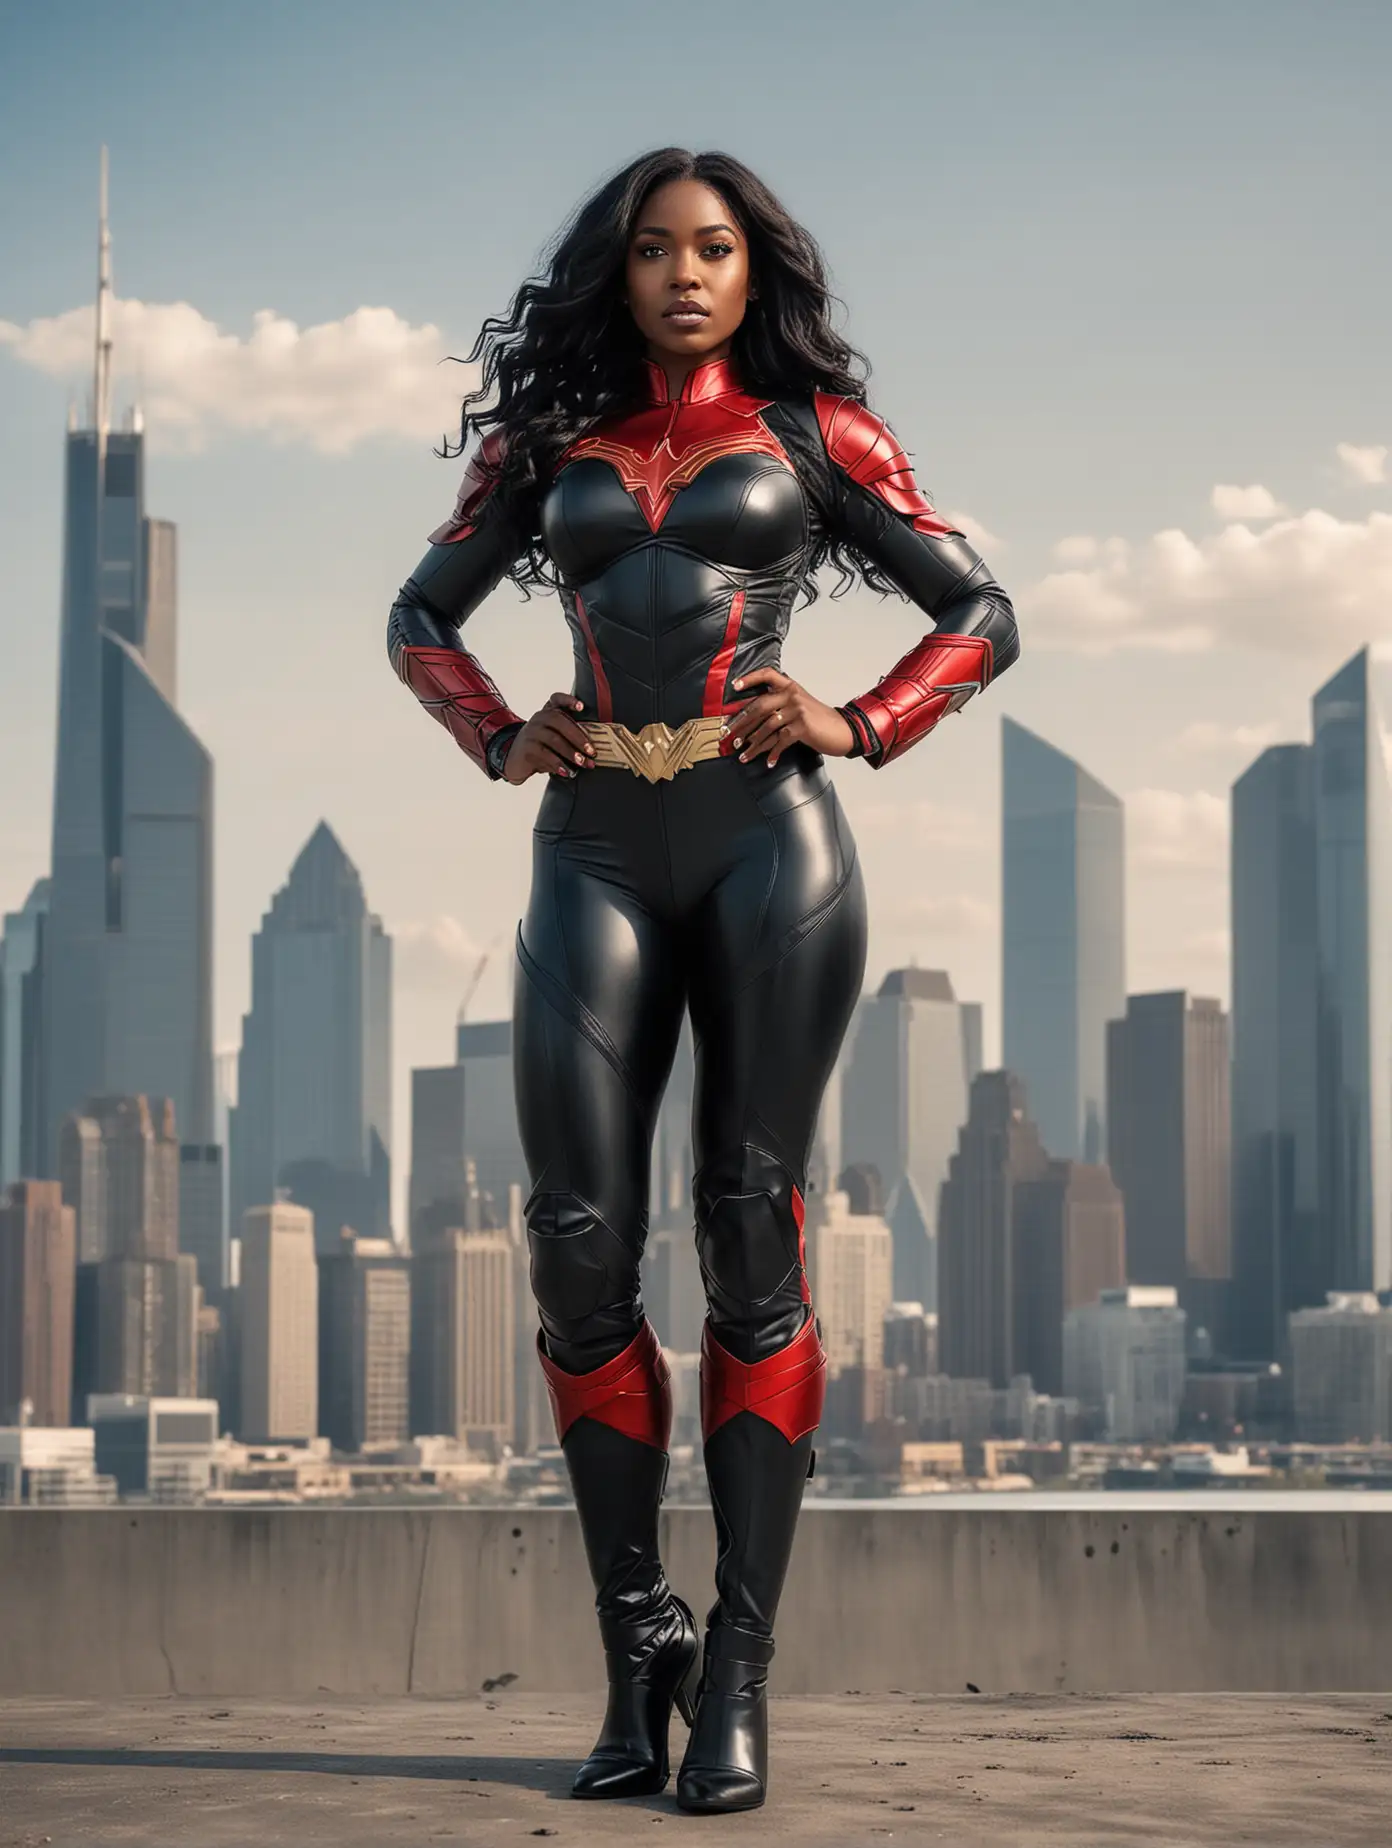 Powerful Black Superhero Woman in Cityscape